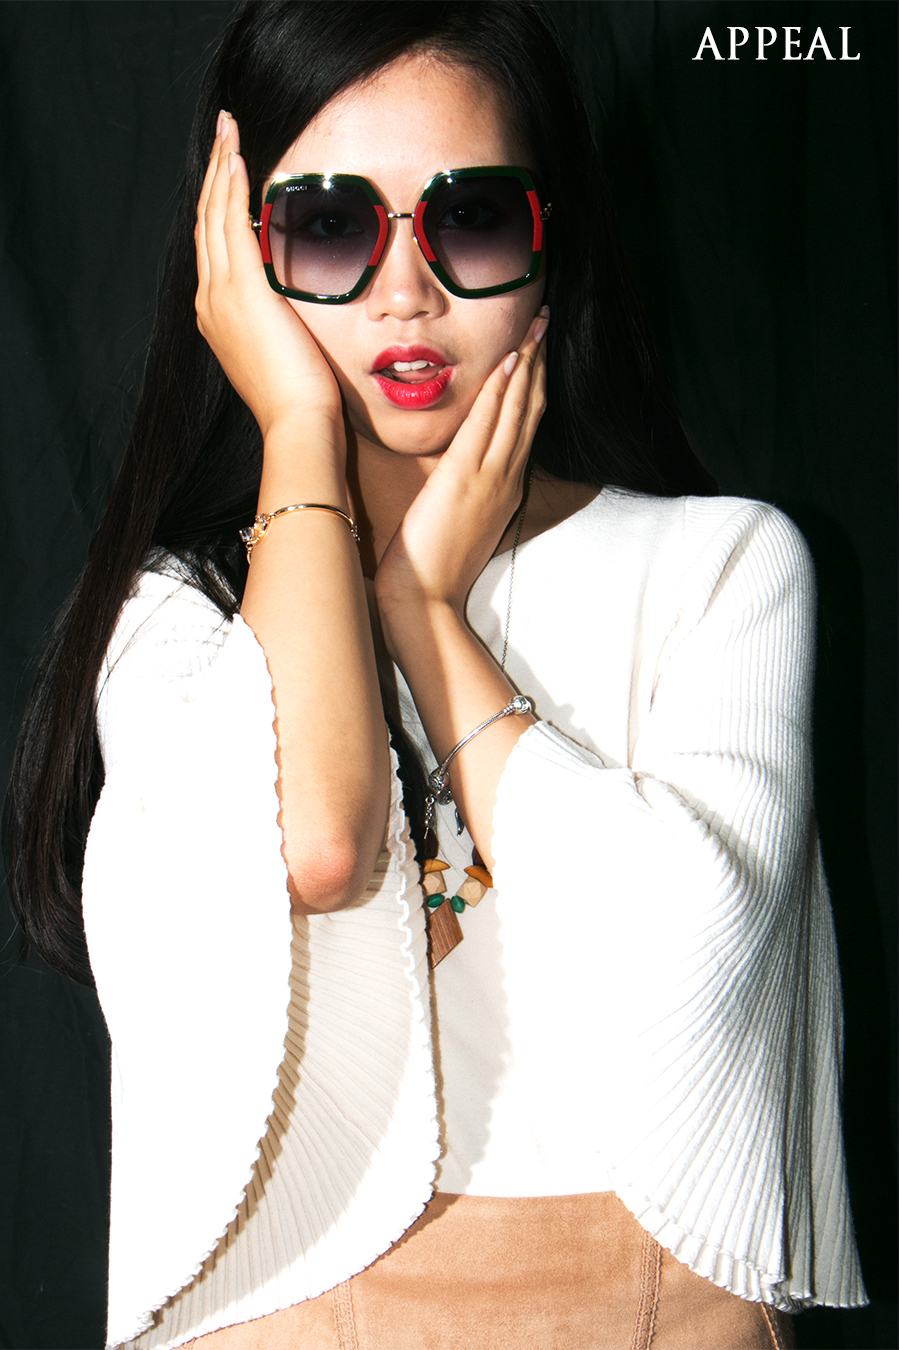 Jingyi_Sun_Fashion_AD_Campaign_Appeal_Girl_with_sunglasses_portrait